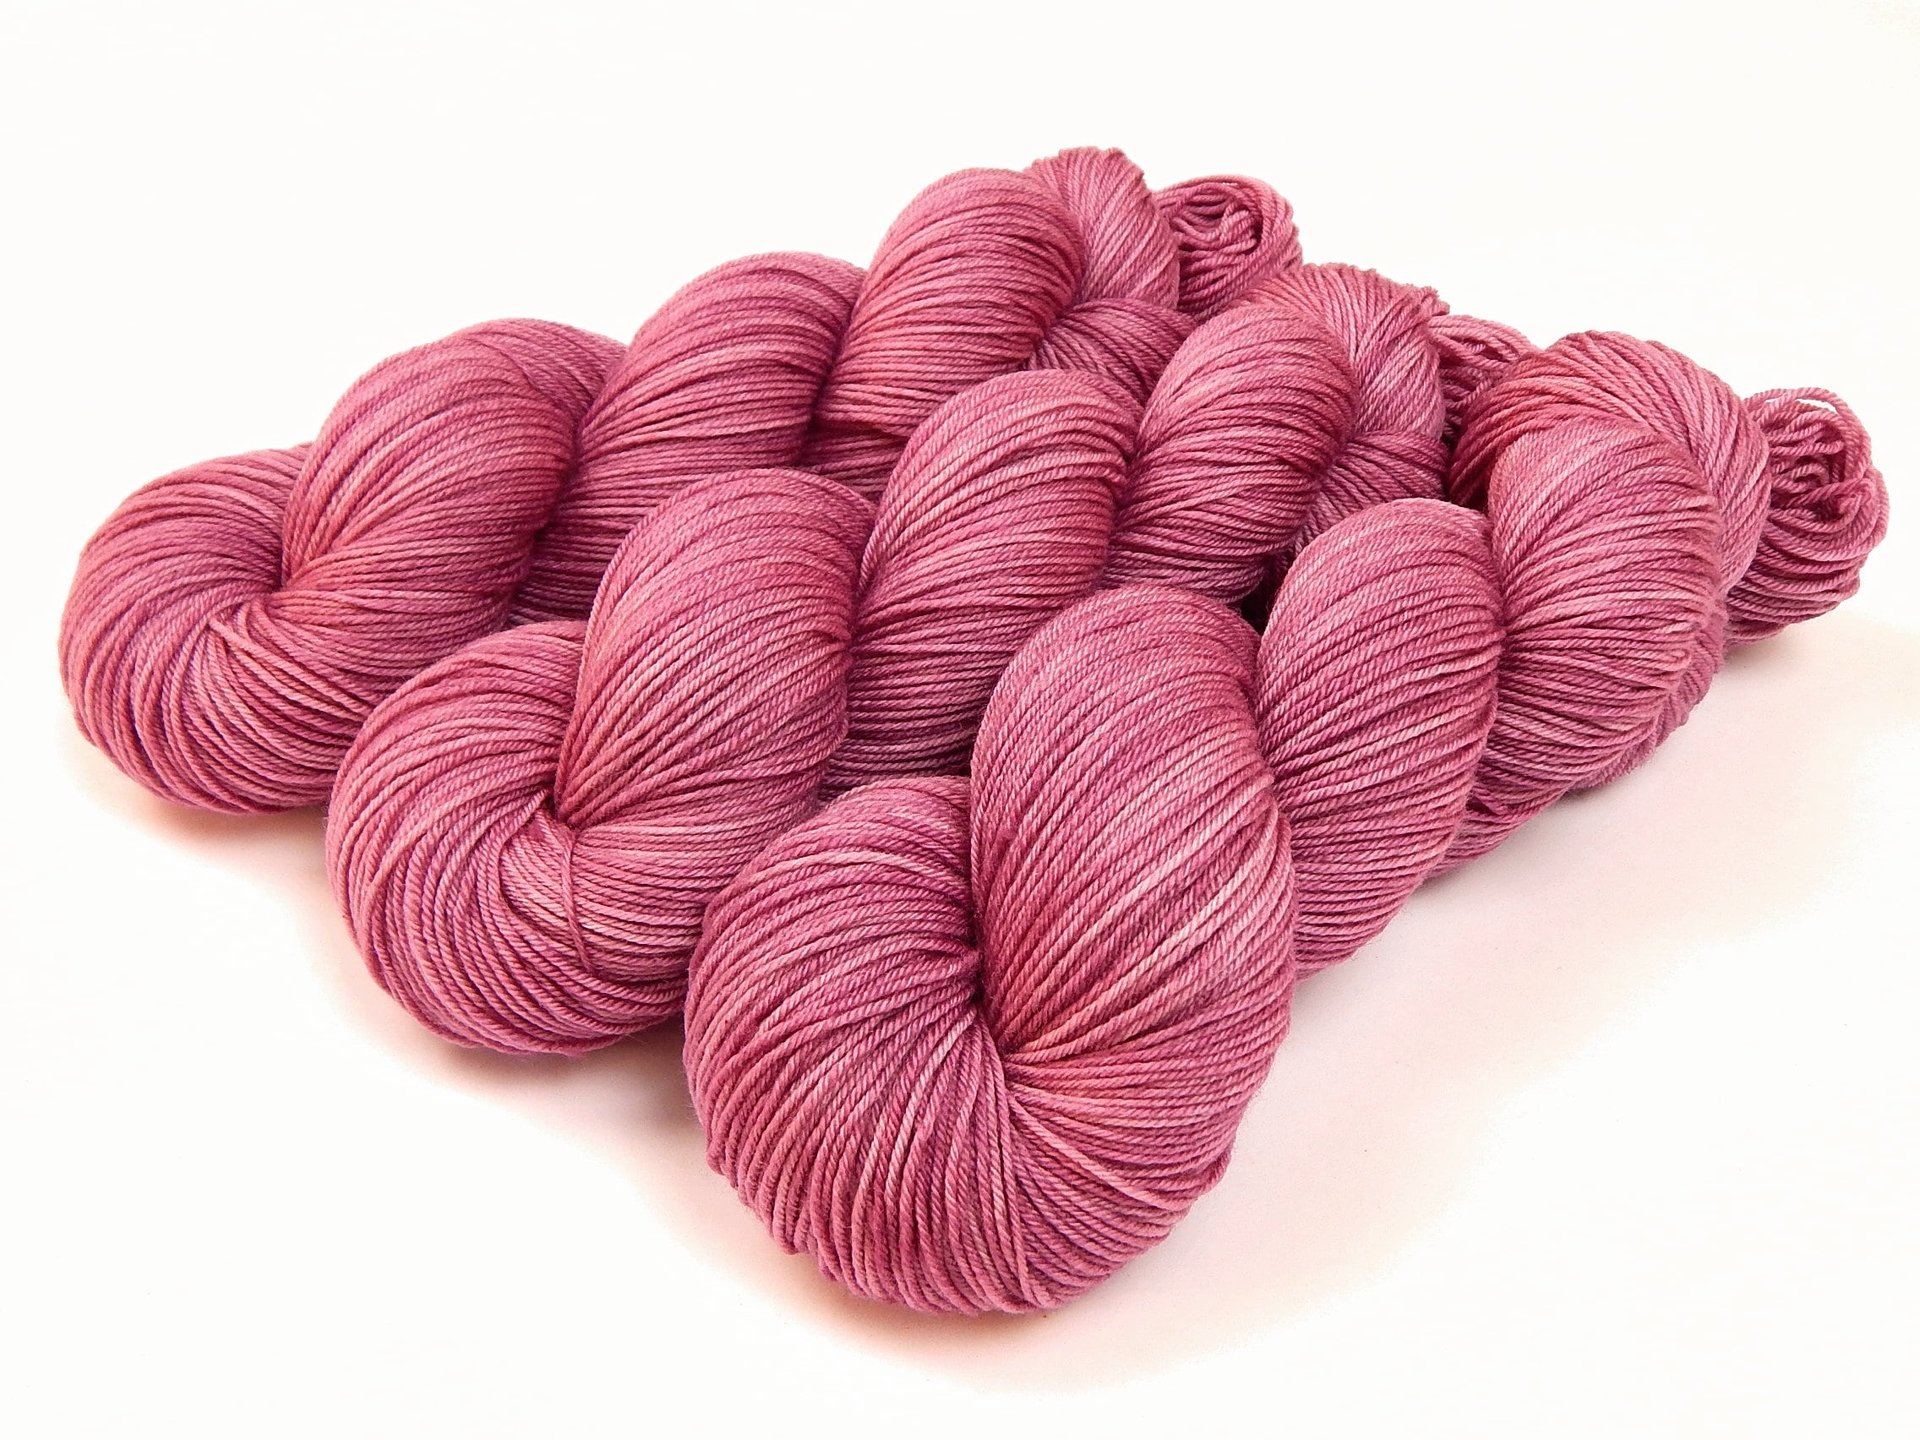 Hand Dyed Yarn, Sock Fingering Weight 4 Ply Superwash Merino Wool - Sorbet - Tonal Berry Knitting Yarn, Indie Dyer Rose Pink Sock Yarn